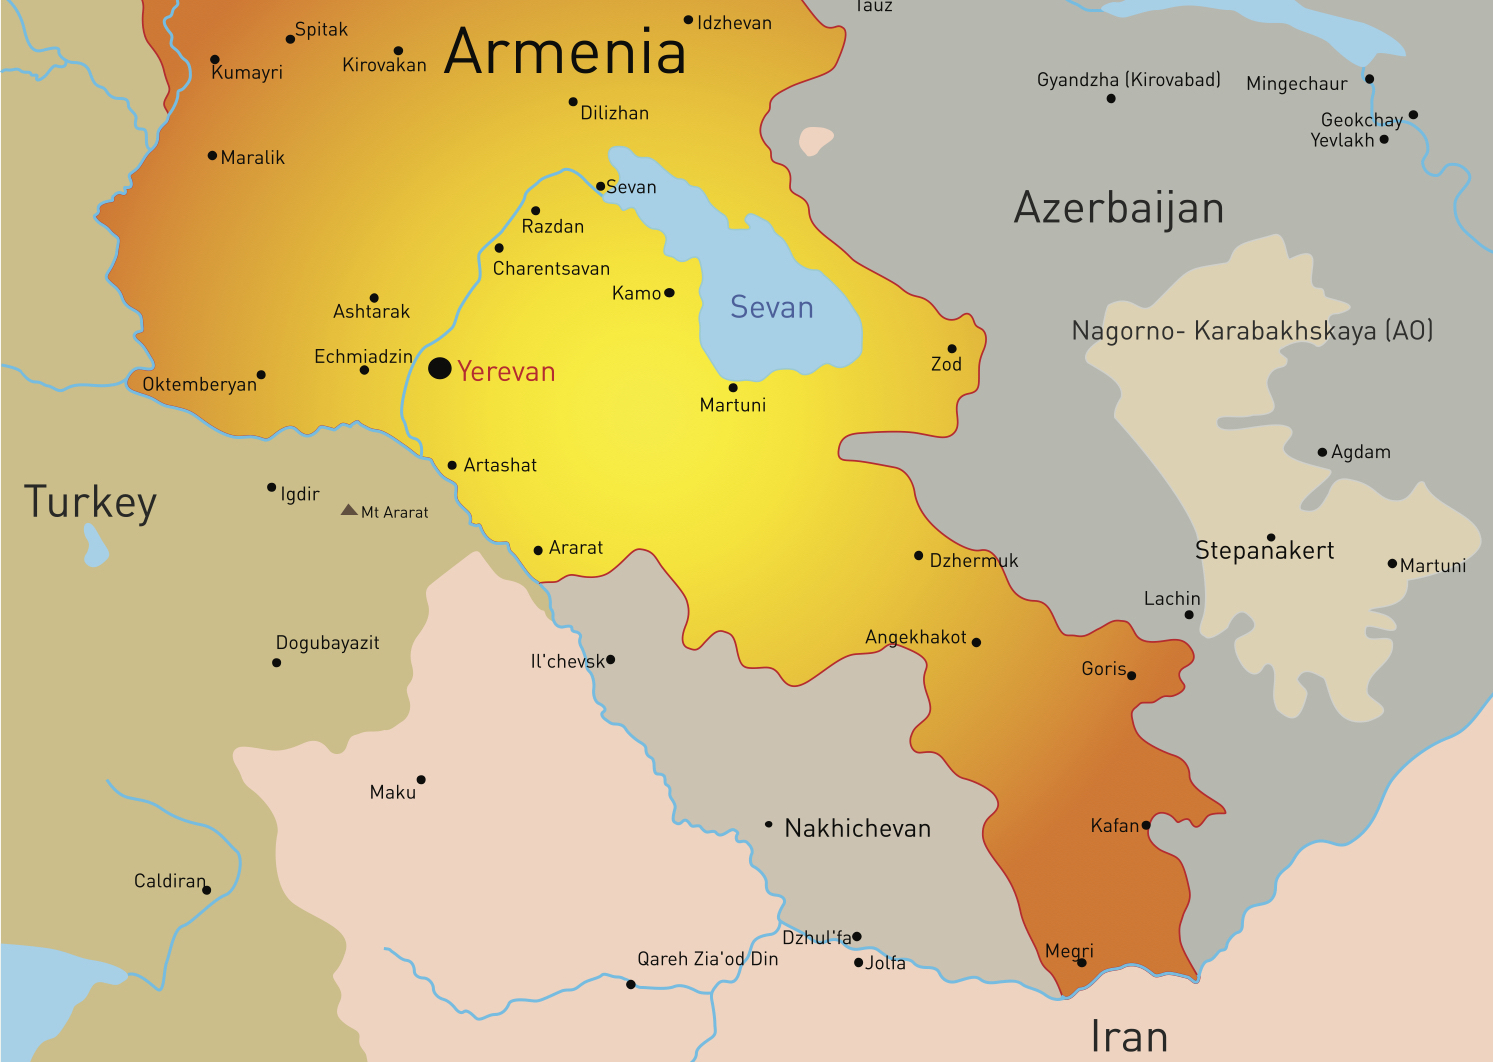 Meghri Becomes Armenia’s Third FEZ - Emerging Europe